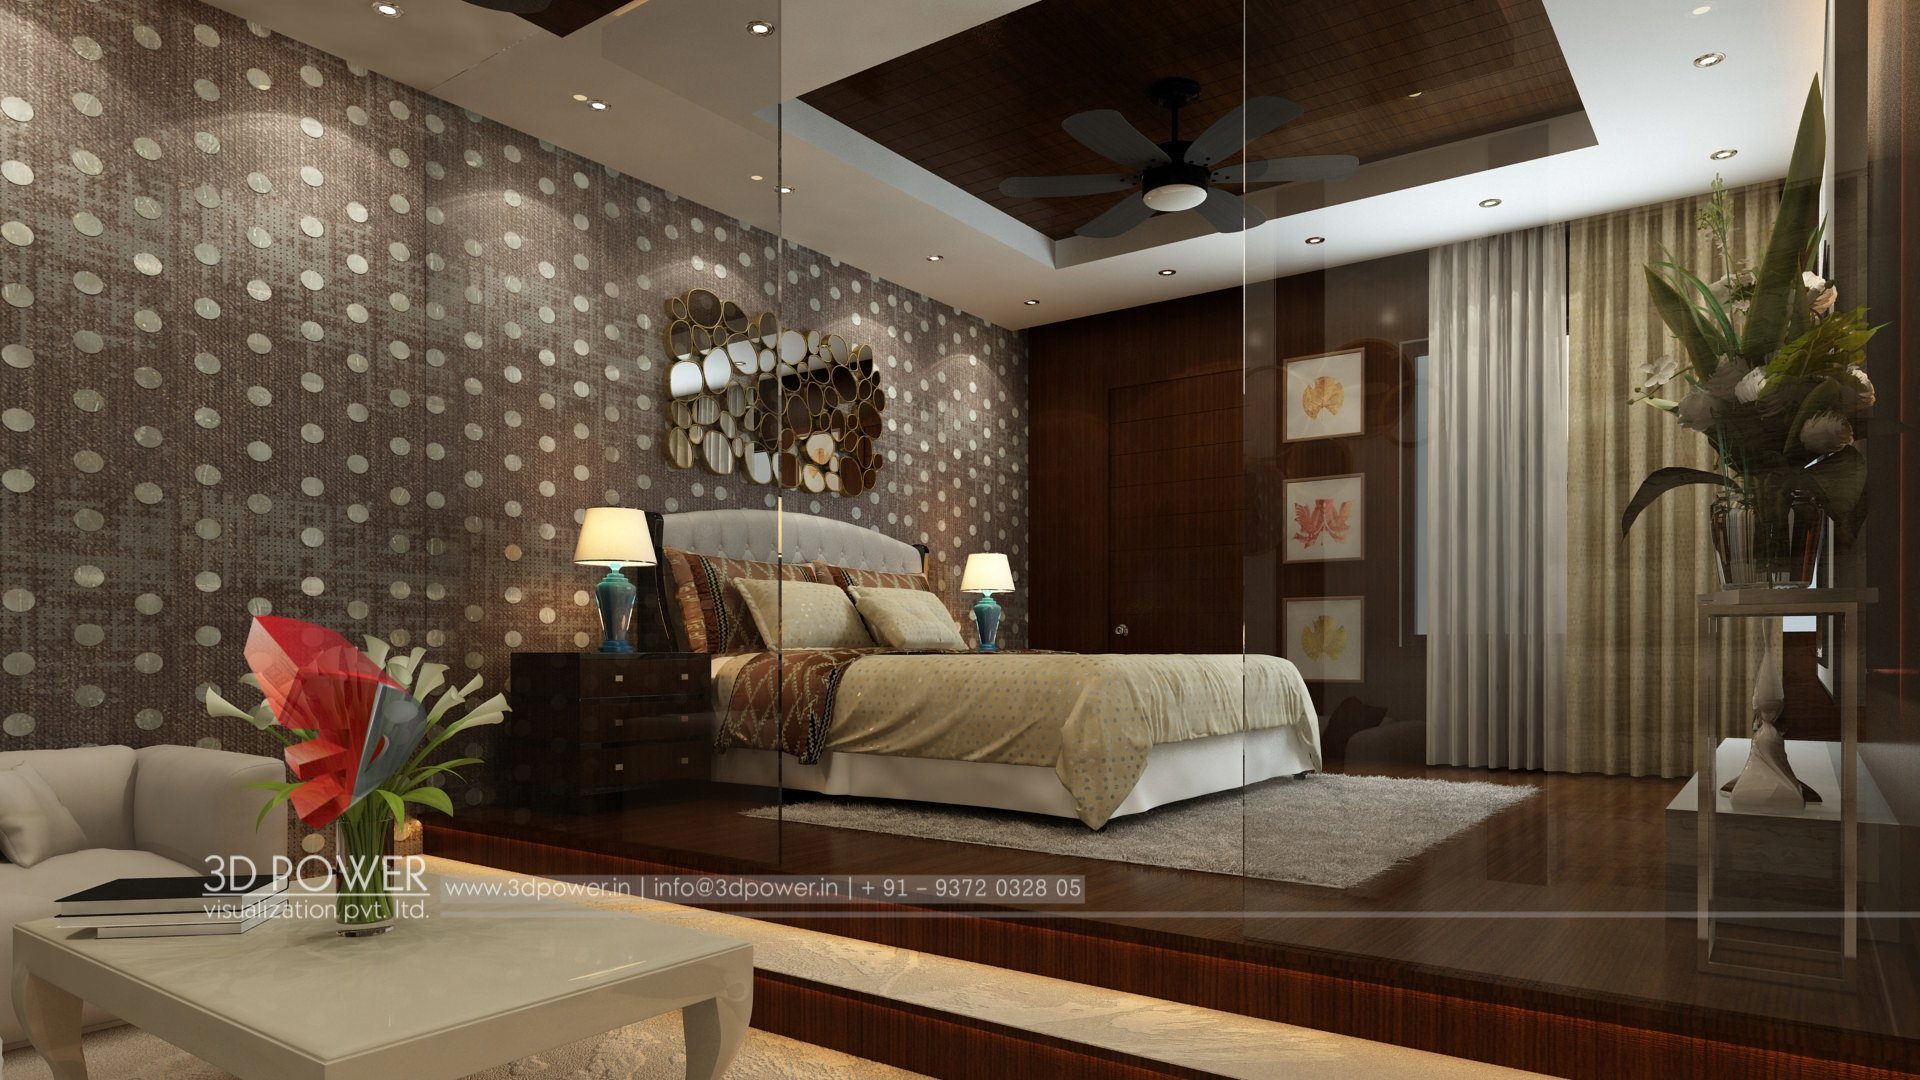 Interior Design 3D Design Services-Bedroom Interior Design PNBLBTO